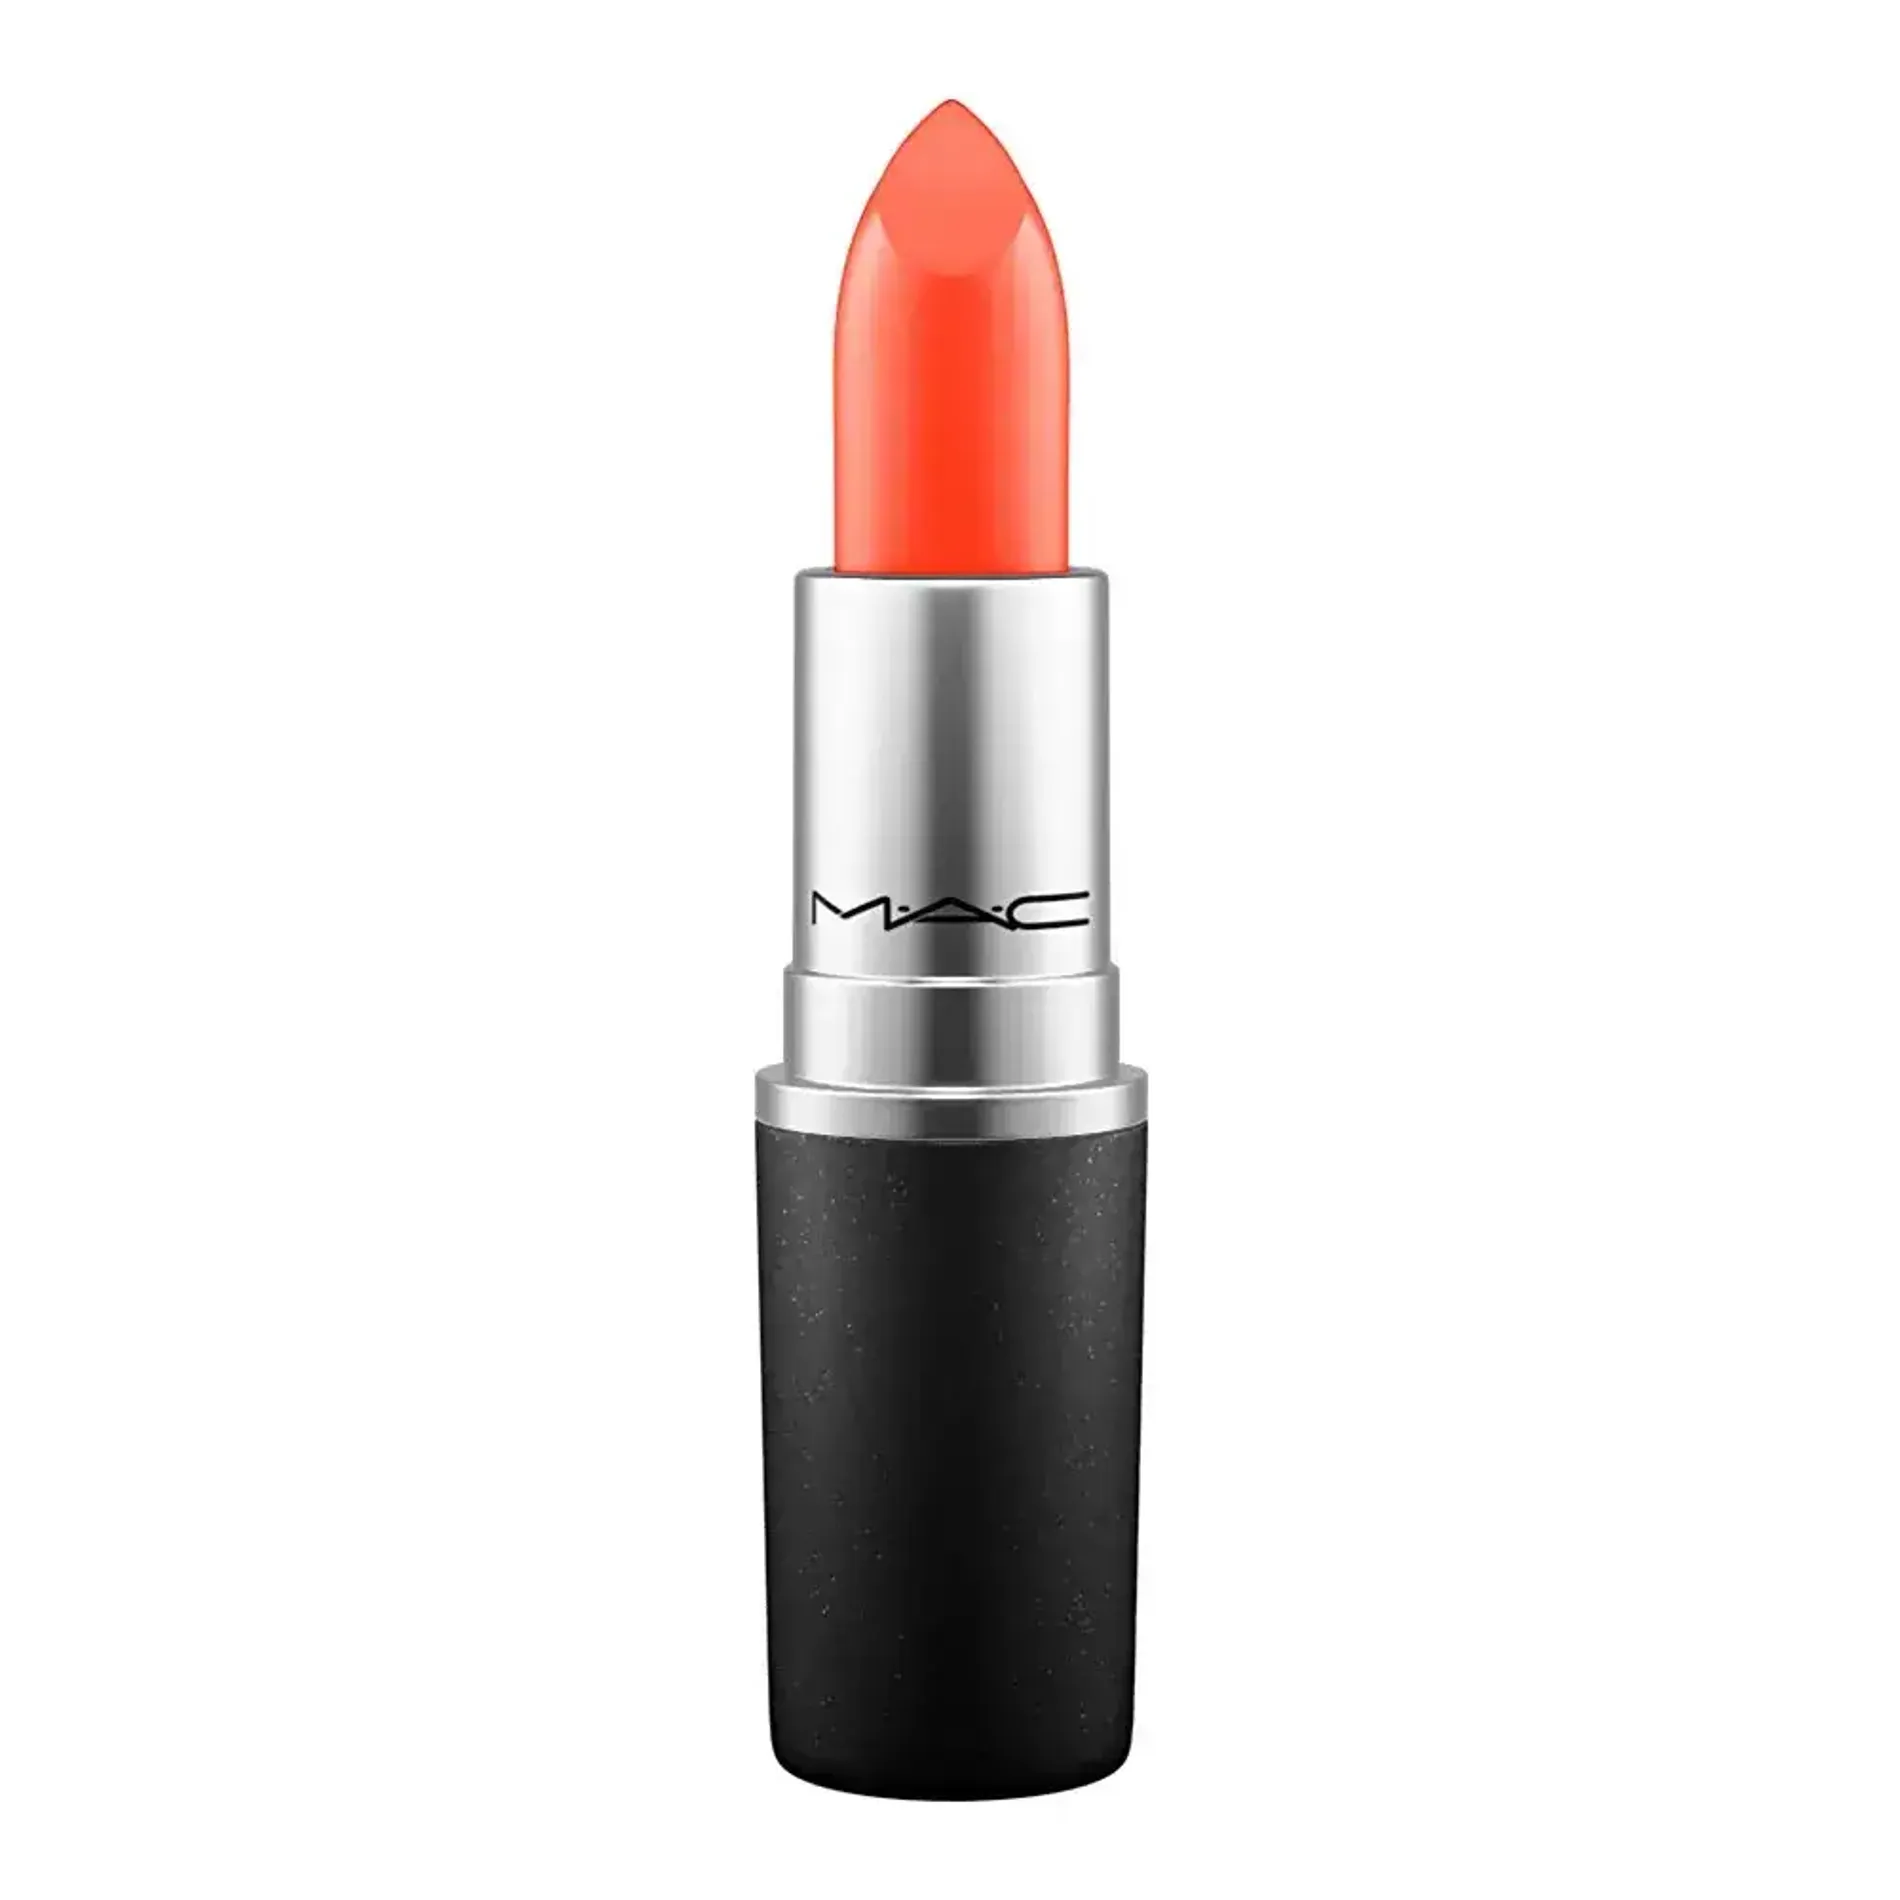 son-thoi-mac-amplified-creme-lipstick-3g-4